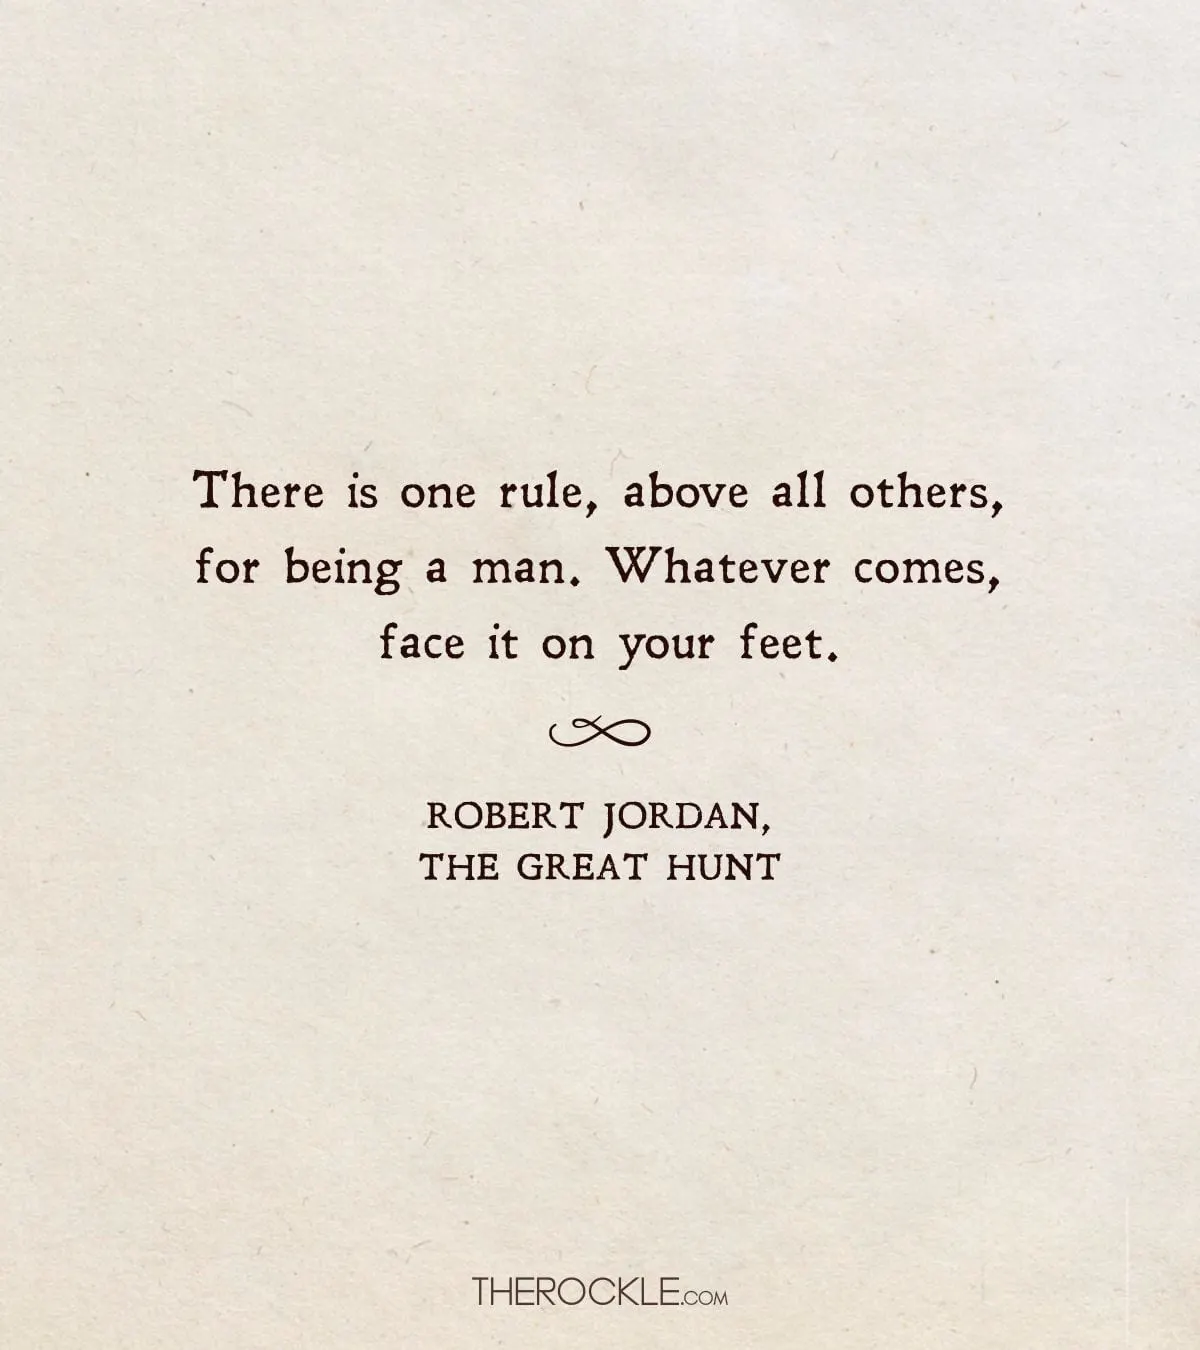 Robert Jordan quote about embracing challenges